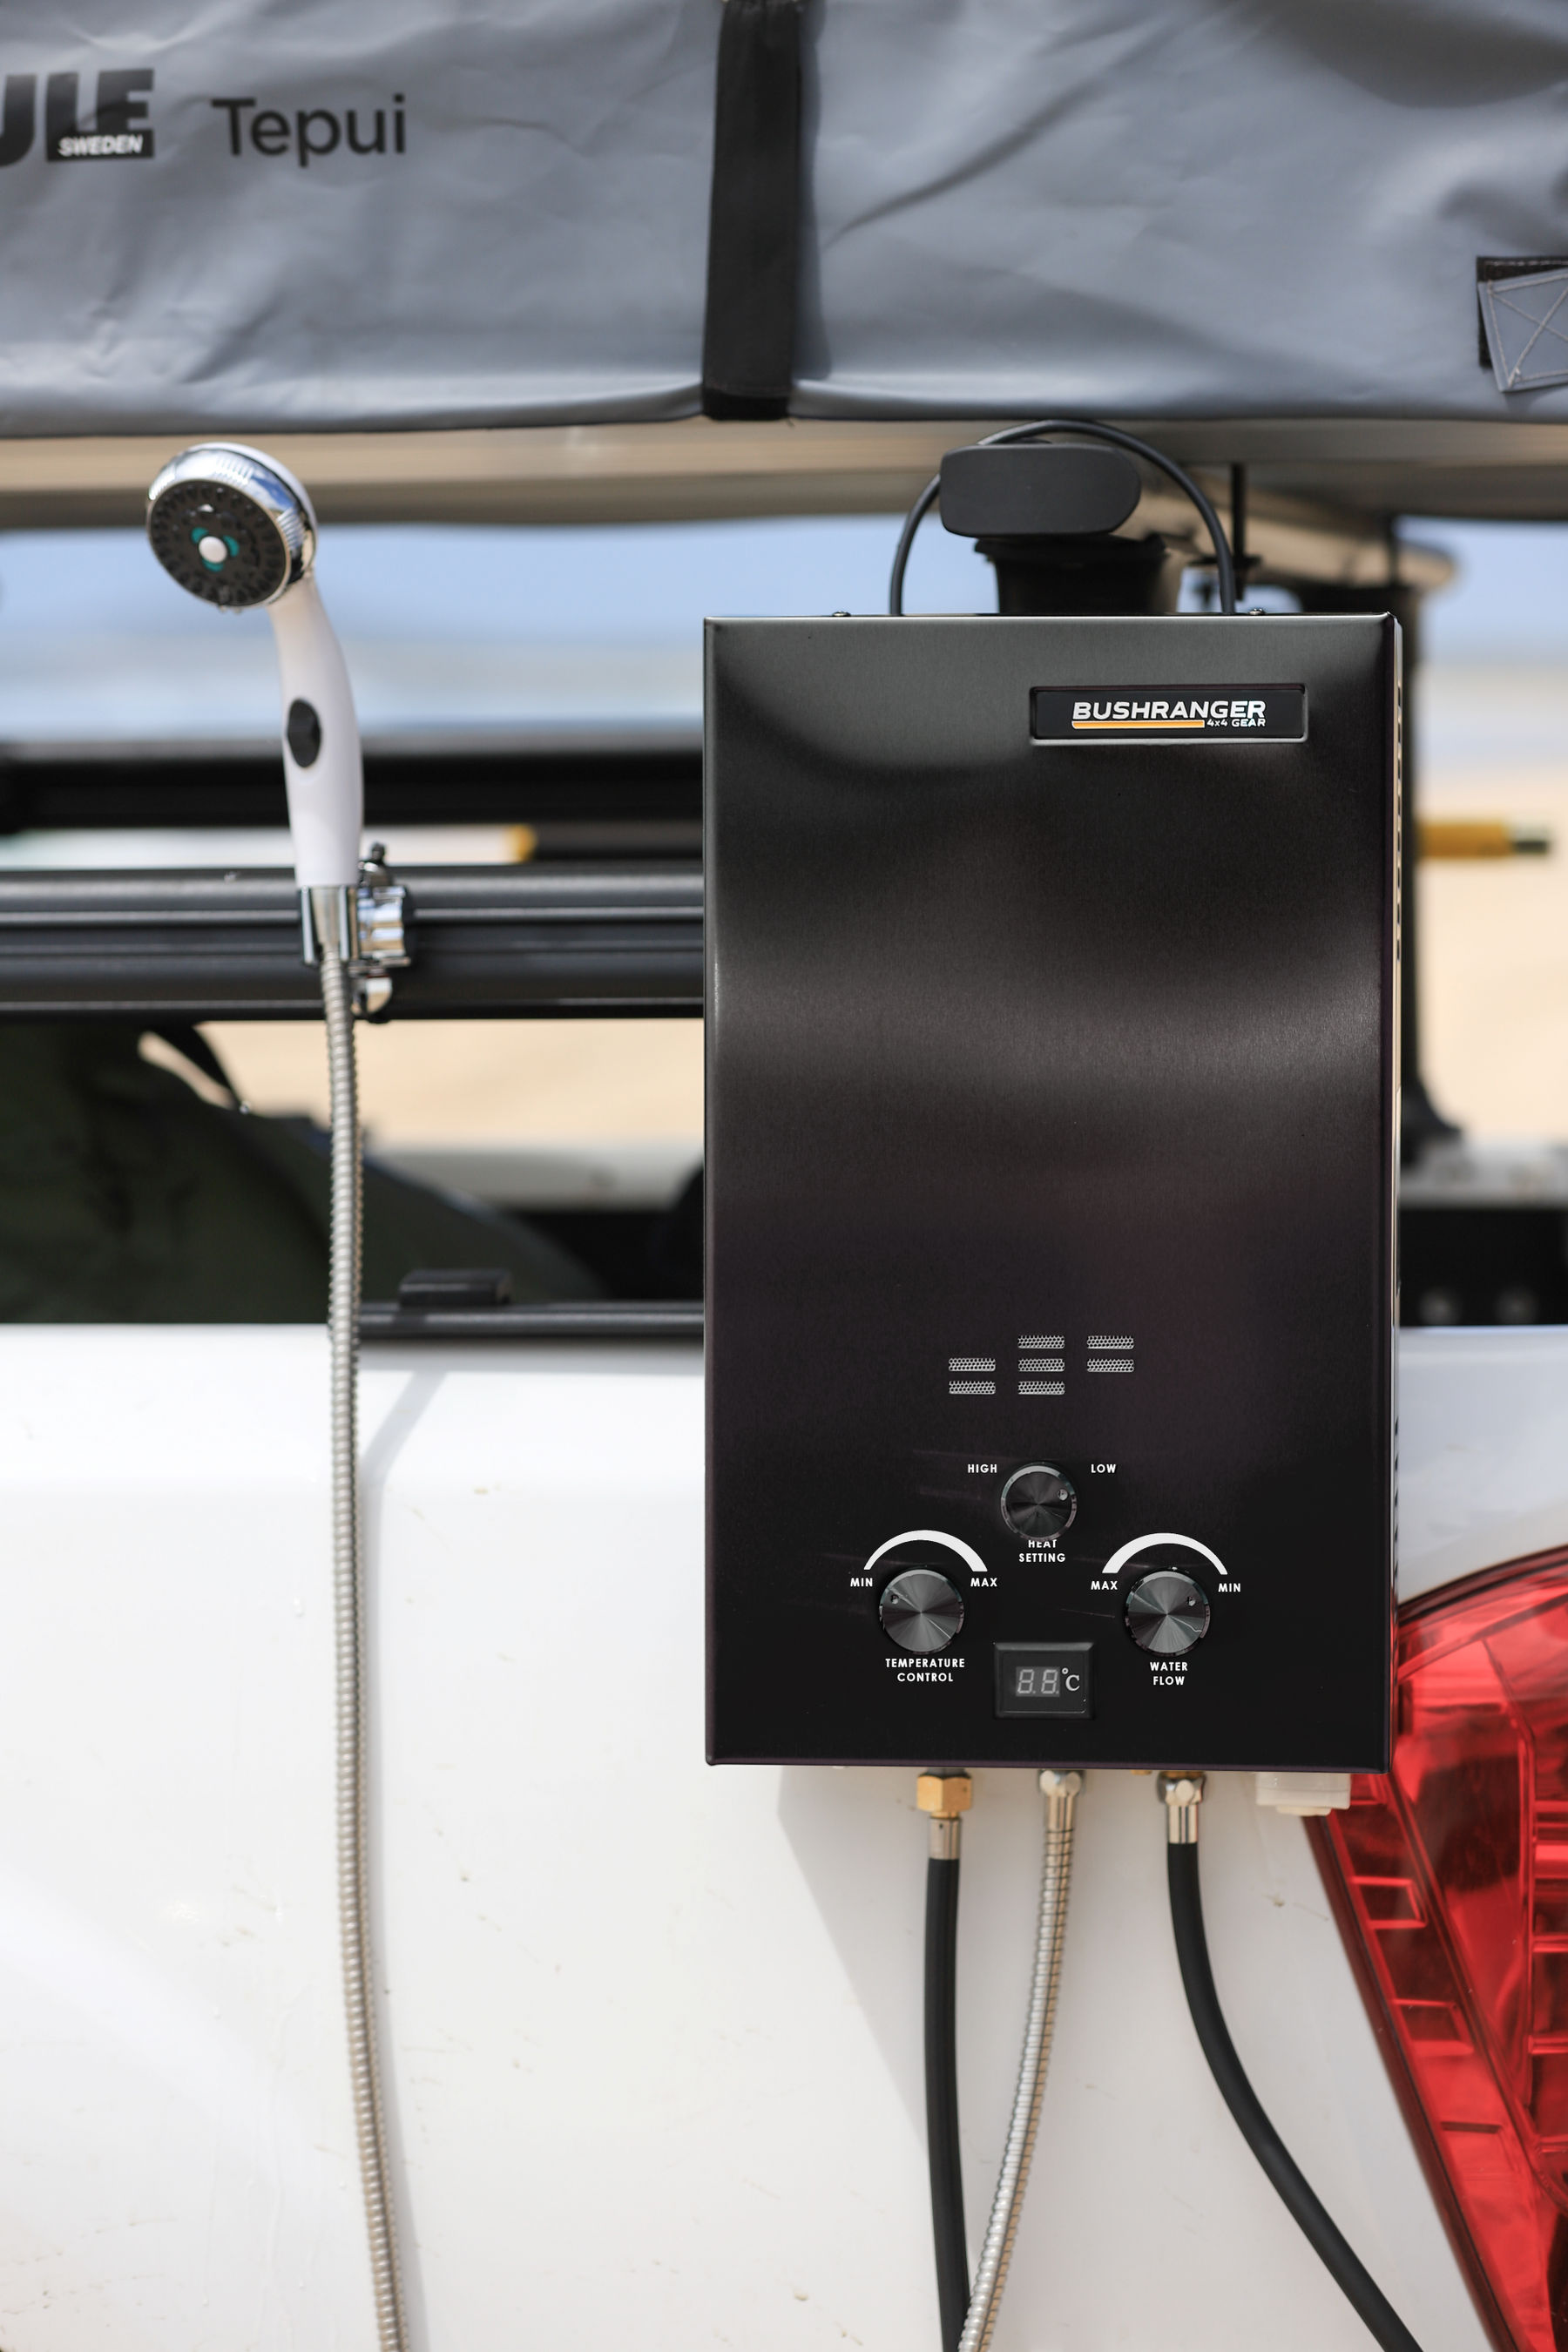 Bushranger Portable Gas Hot Water Shower Kit